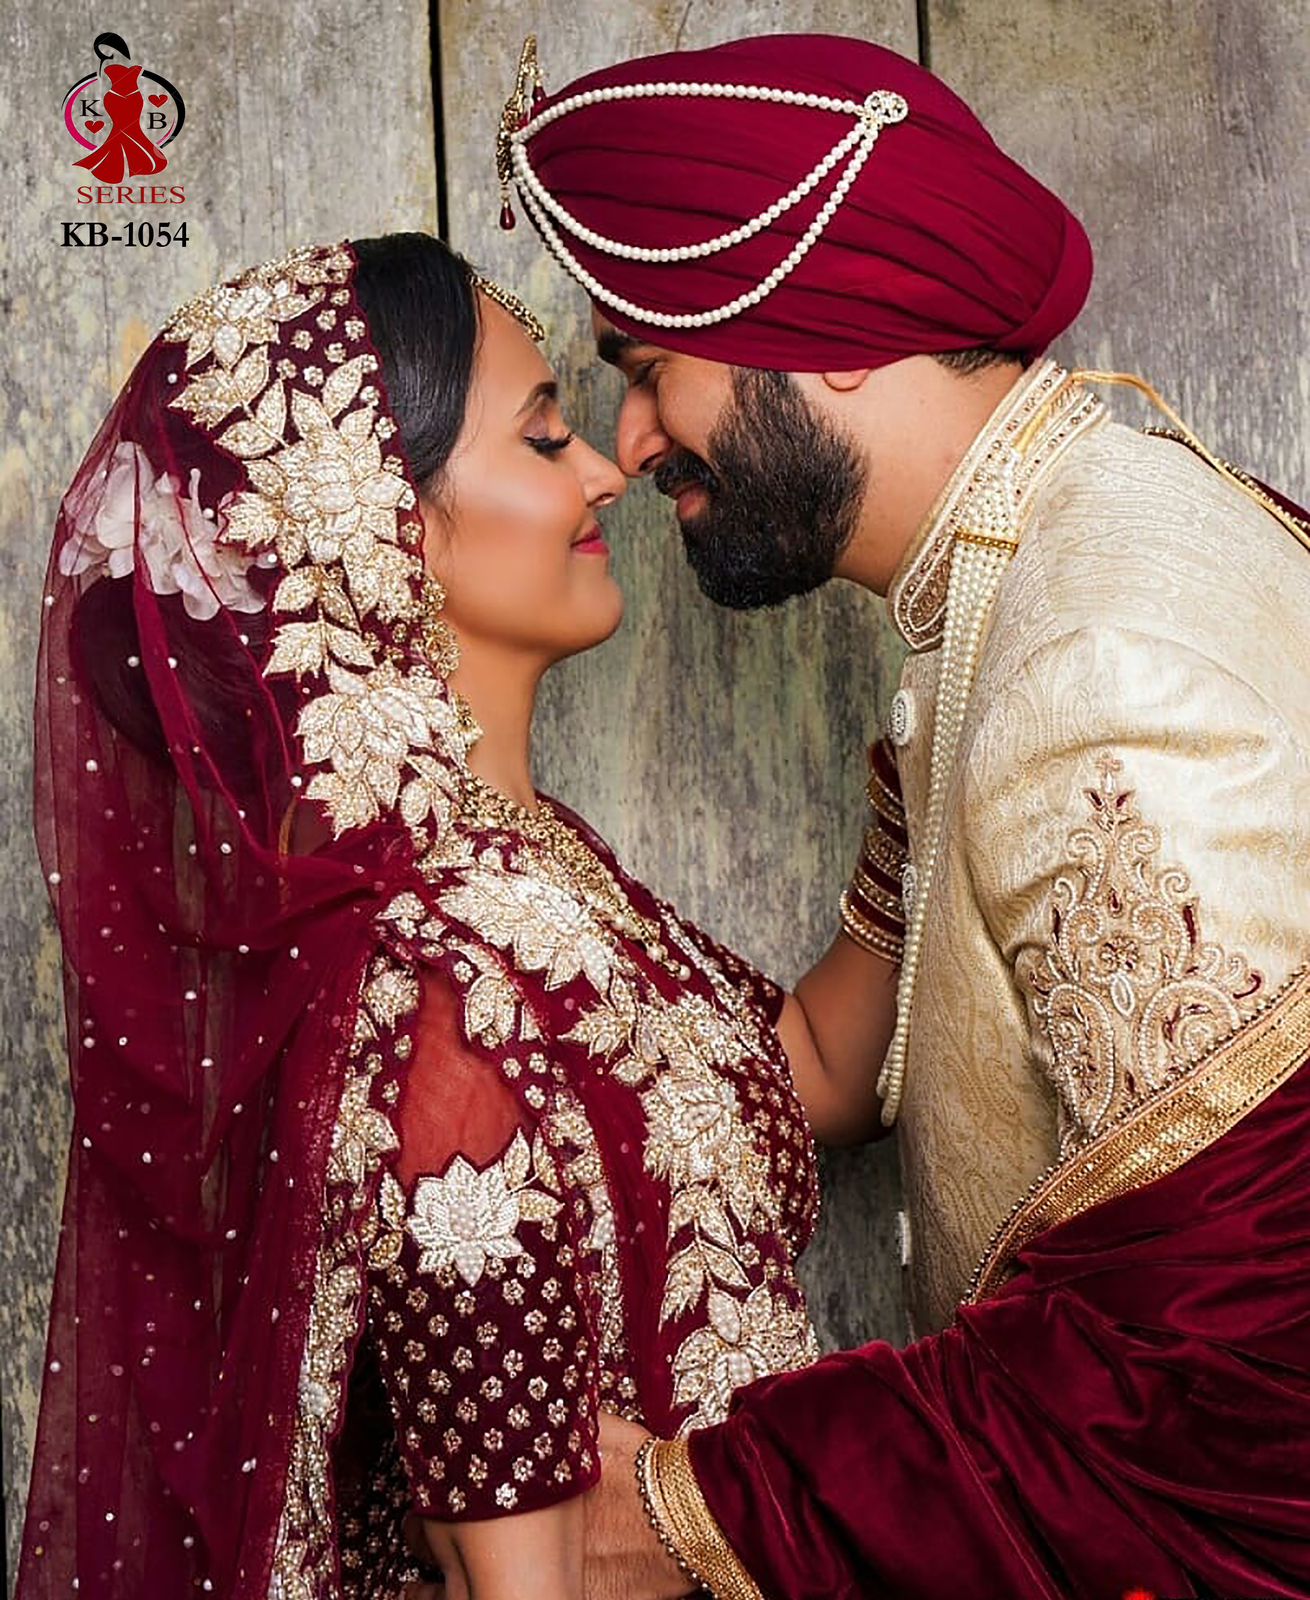 30 Sikh Bridal Lehenga Colors To Bookmark Right Now - Pyaari Weddings